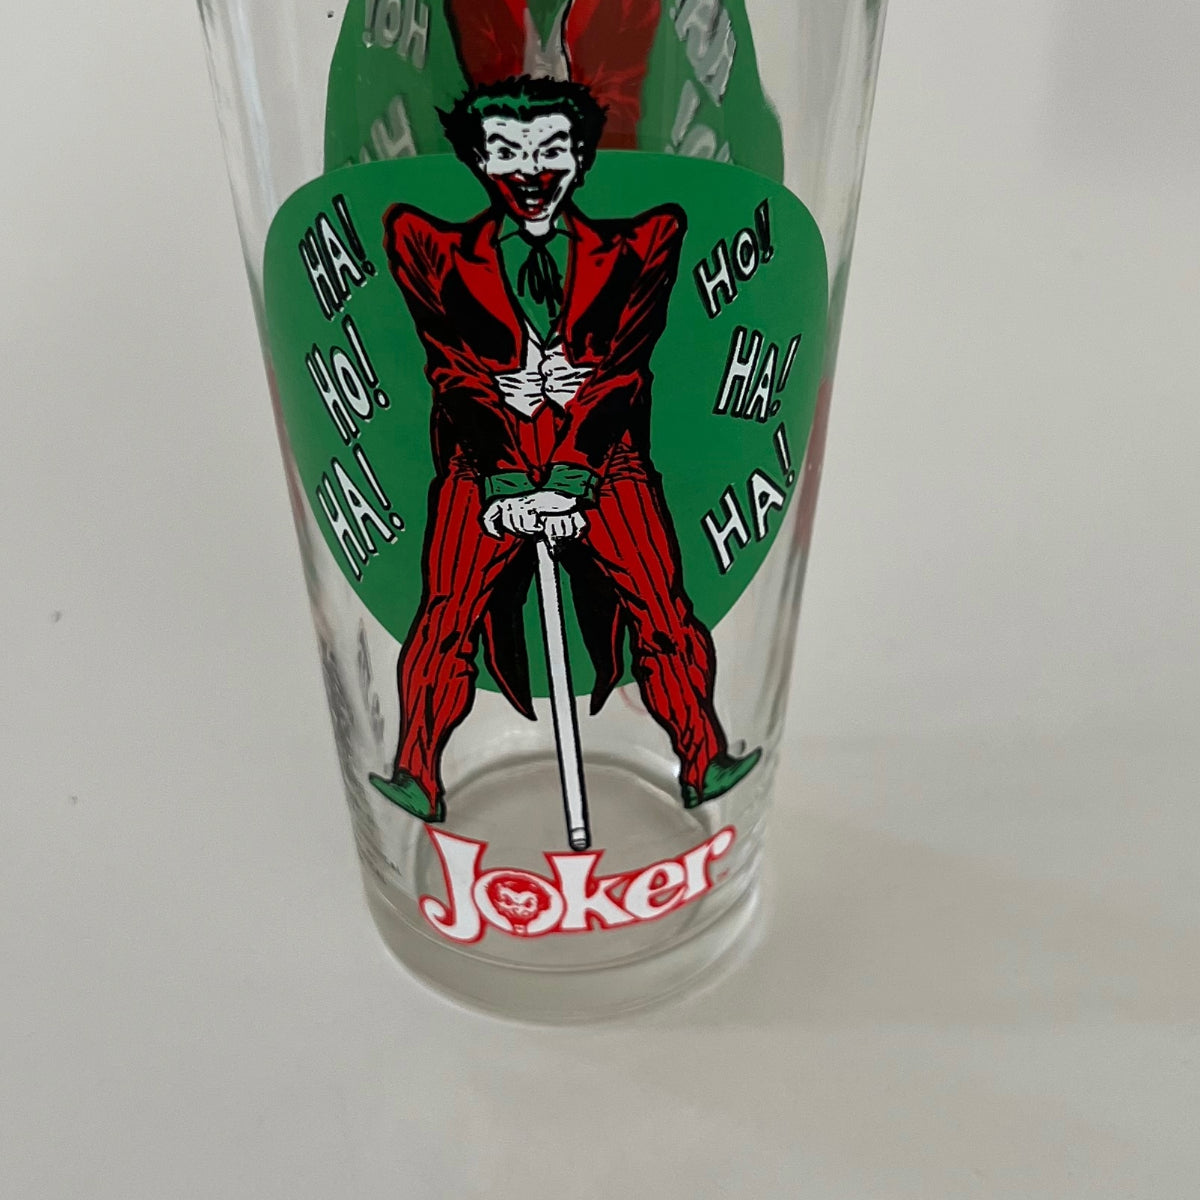 Vintage 1970s Pepsi DC Comics Joker Drinking Glass